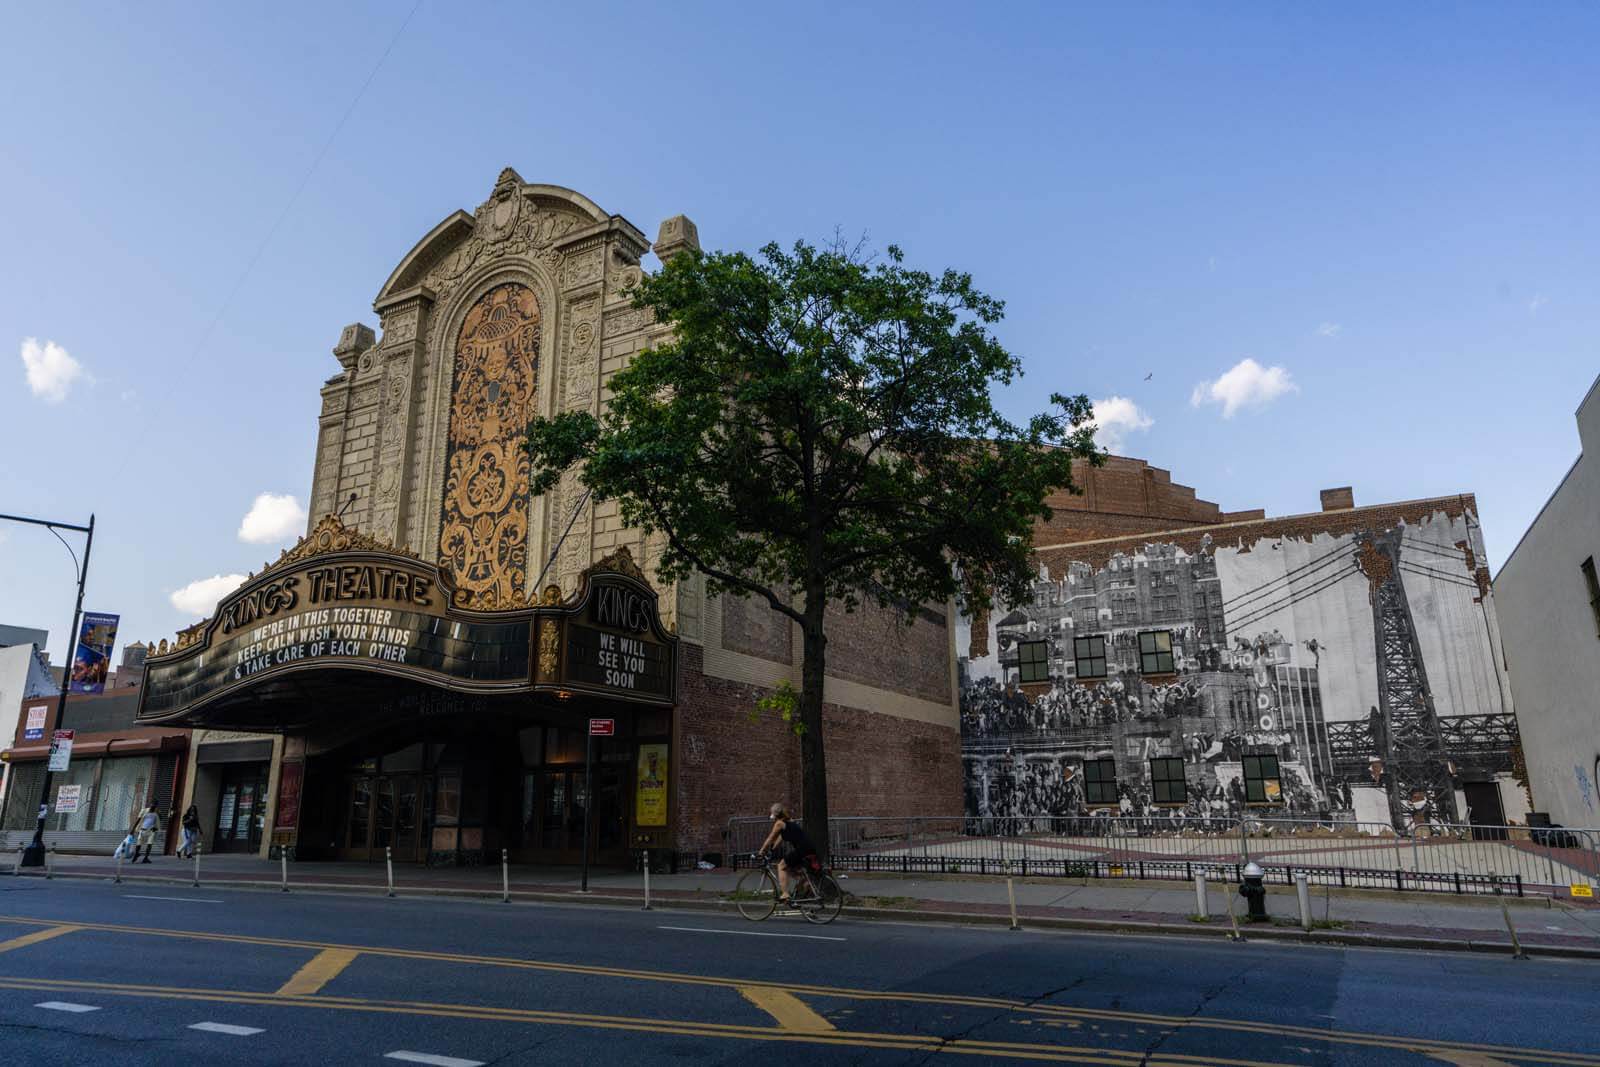 Kings Theater and Mural in Flatbush Brooklyn